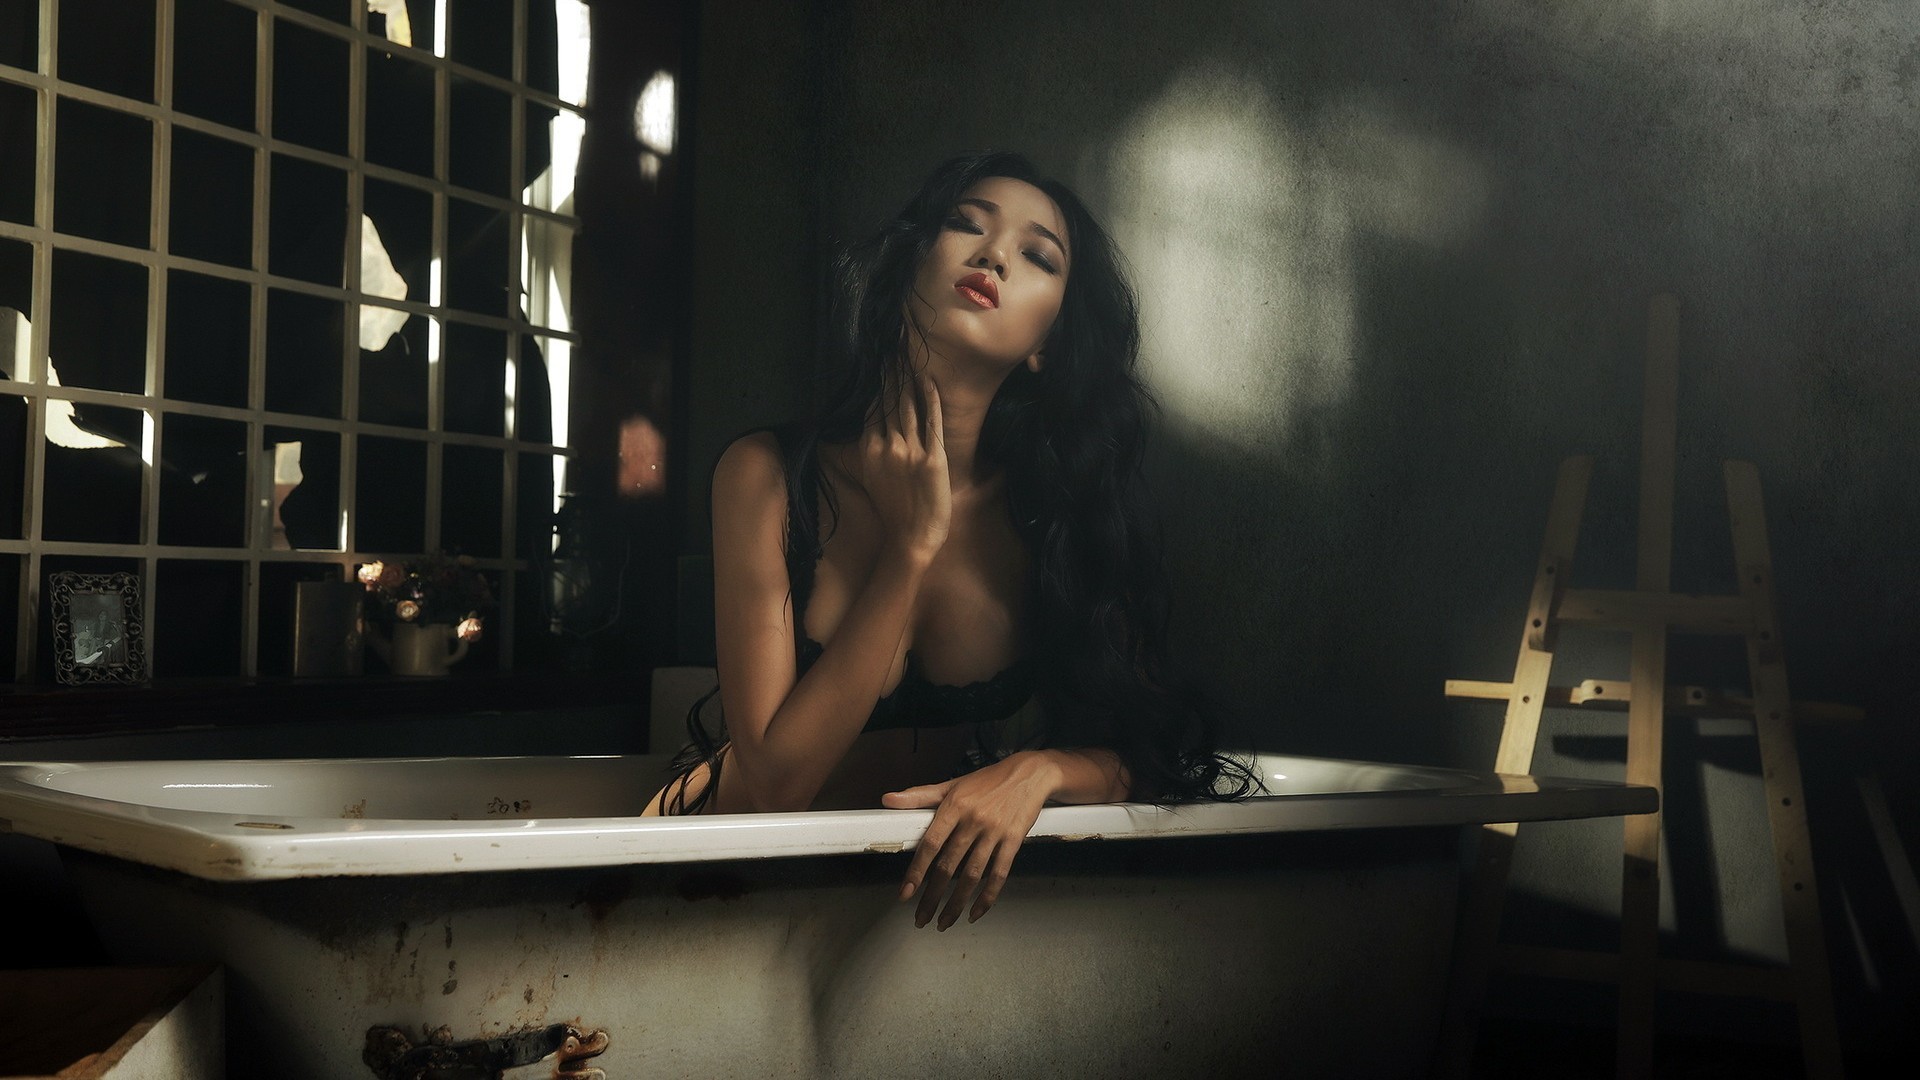 People 1920x1080 Asian women lingerie model closed eyes makeup red lipstick in bathtub bathtub women indoors indoors dark hair boobs long hair sensual gaze brunette